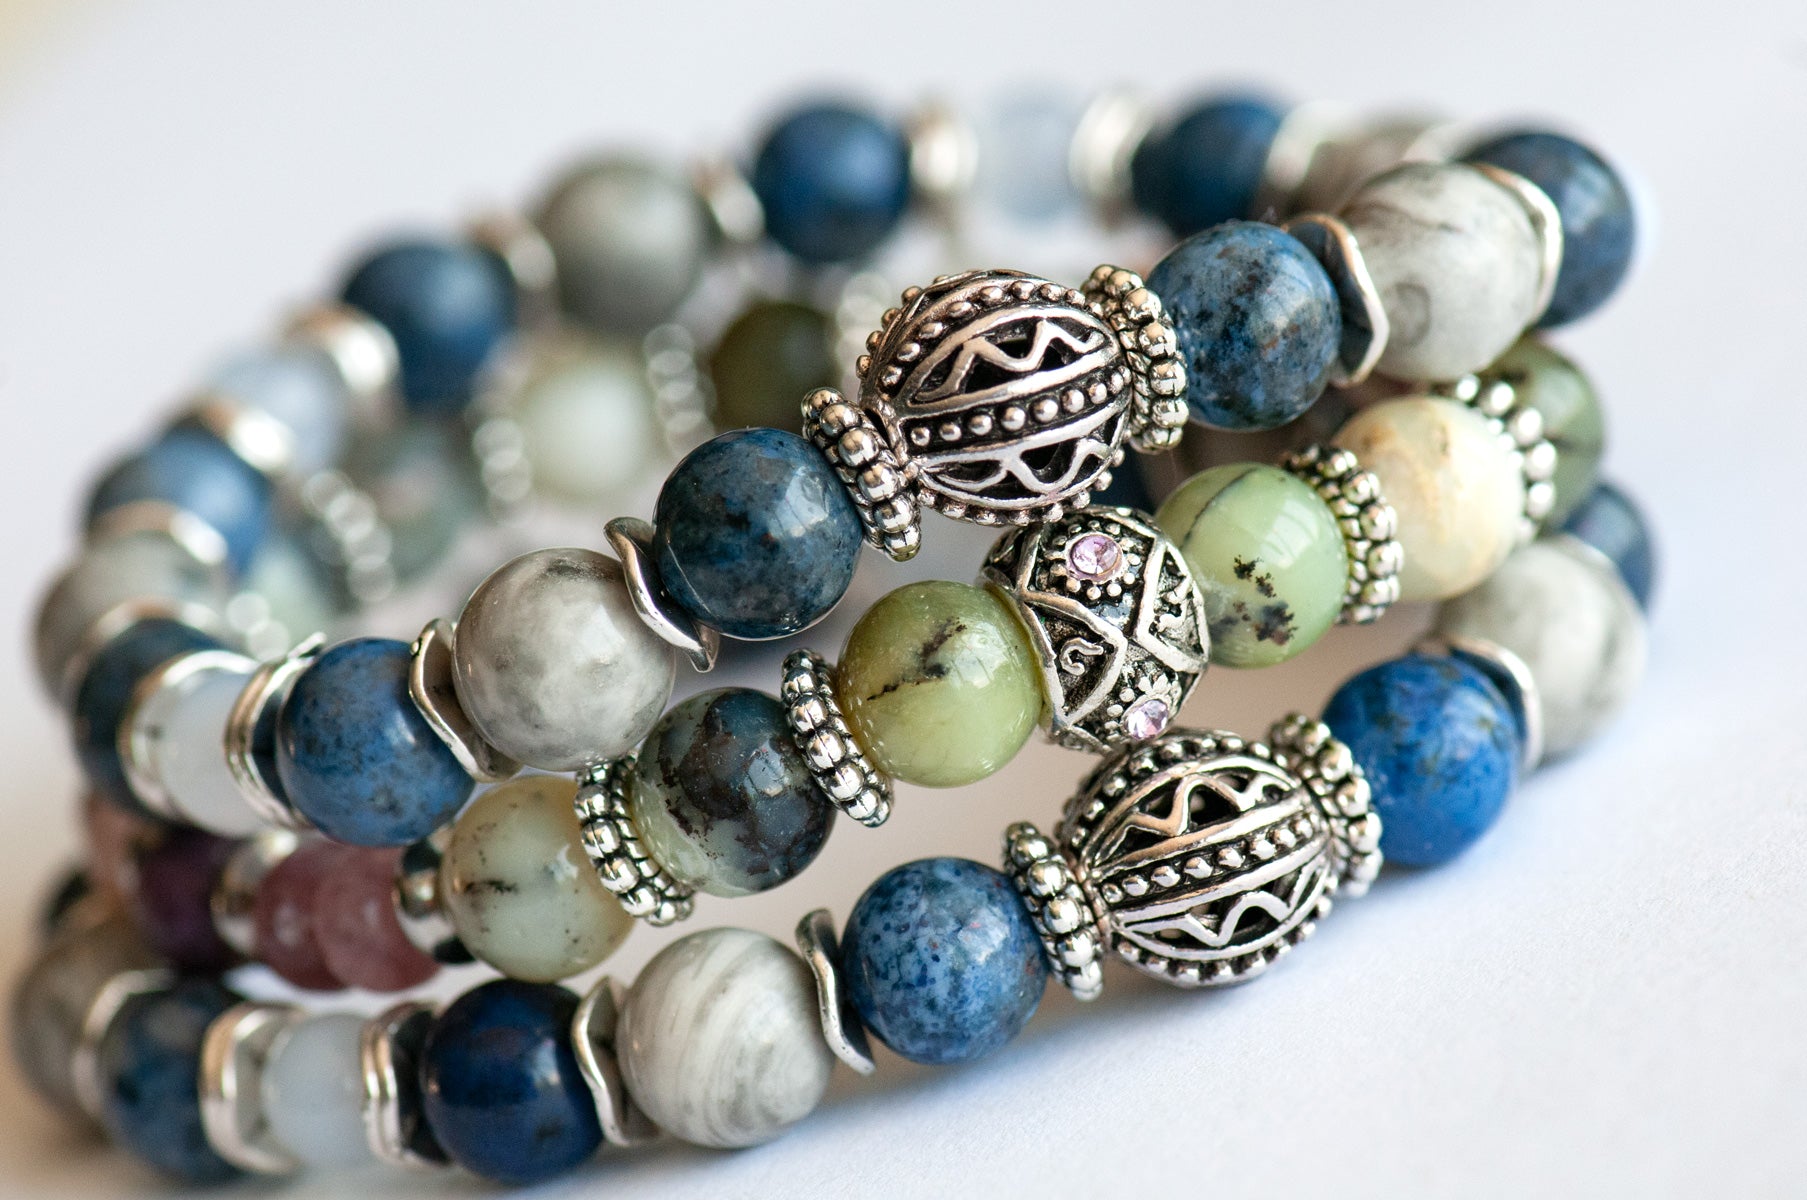 Heather Harbour handmade gemstone bracelet inspired by Scotland travel